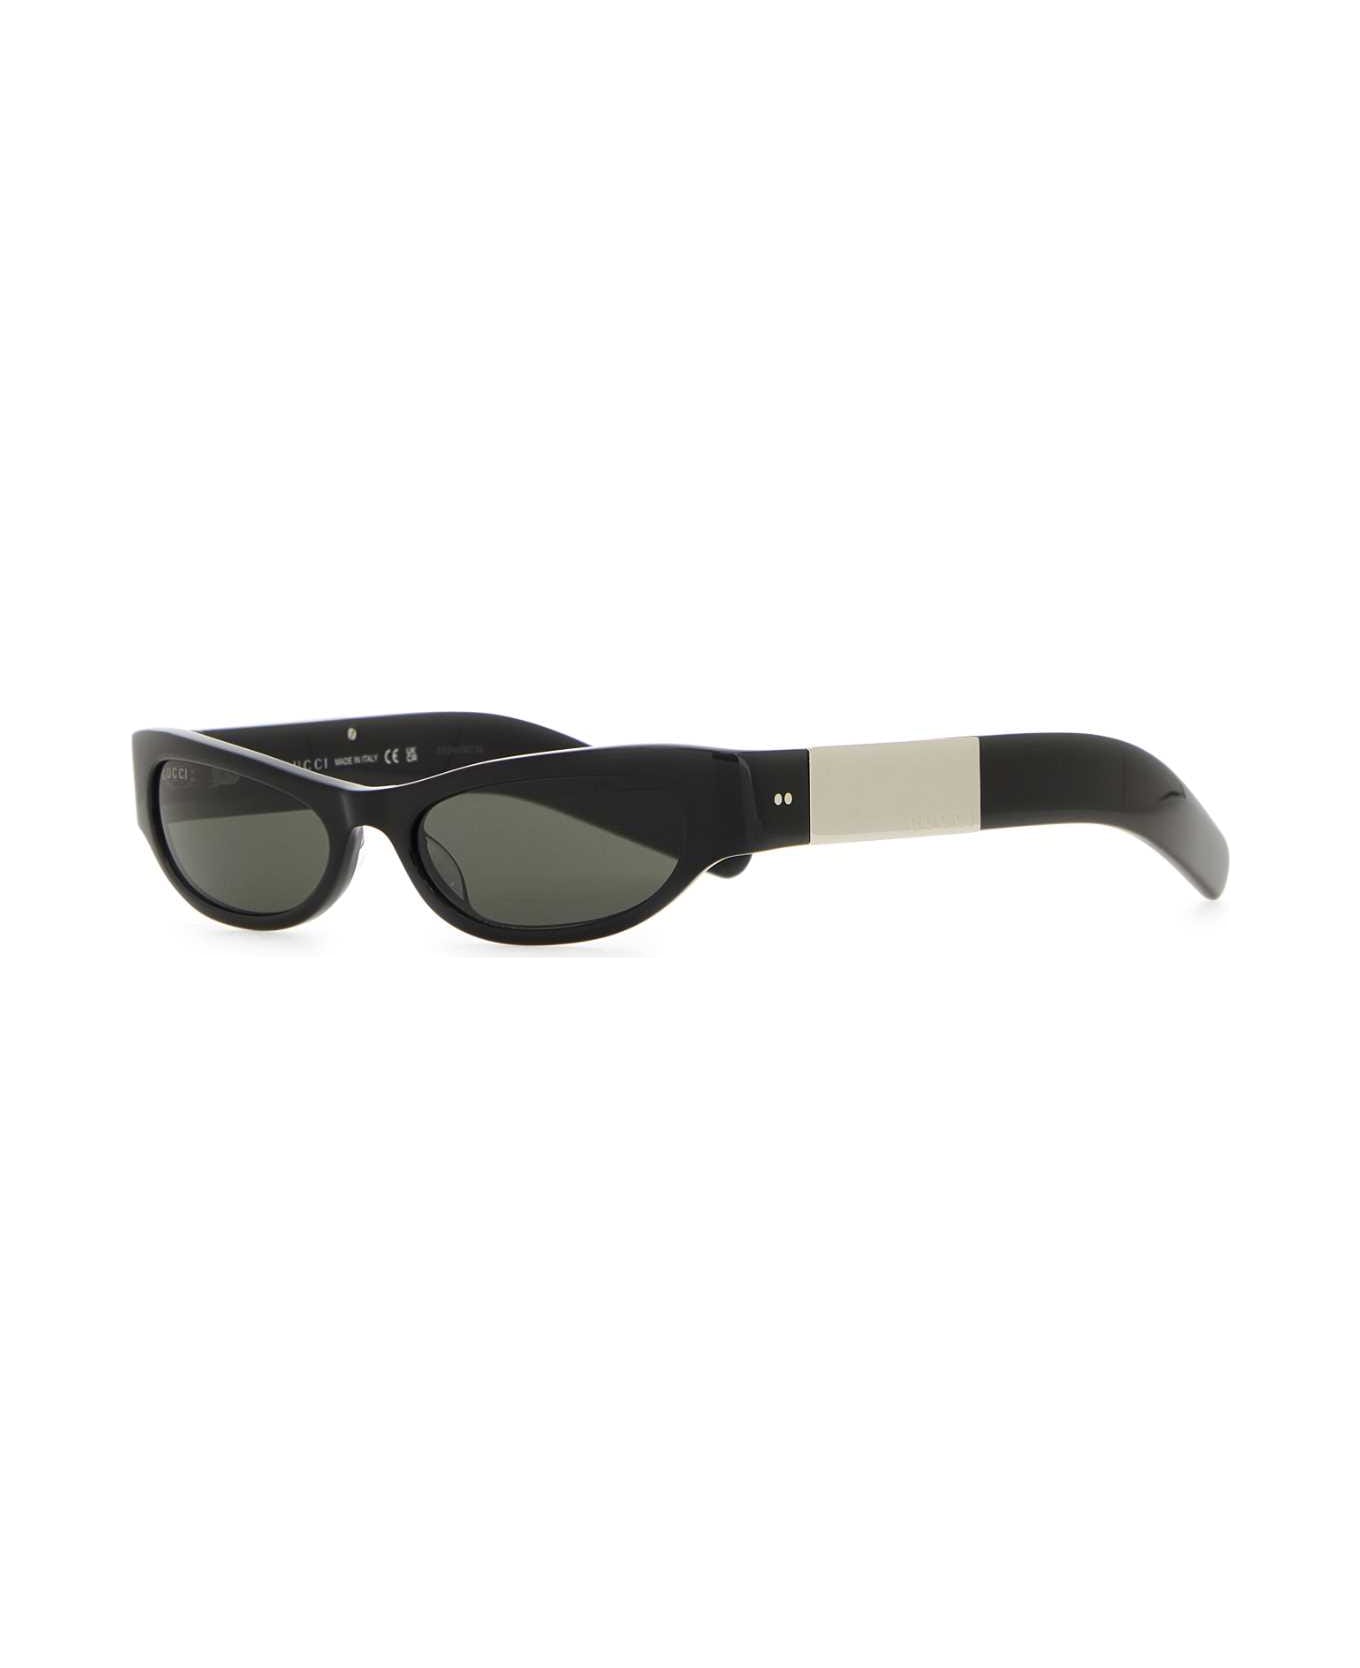 Gucci Black Acetate Sunglasses - 1012